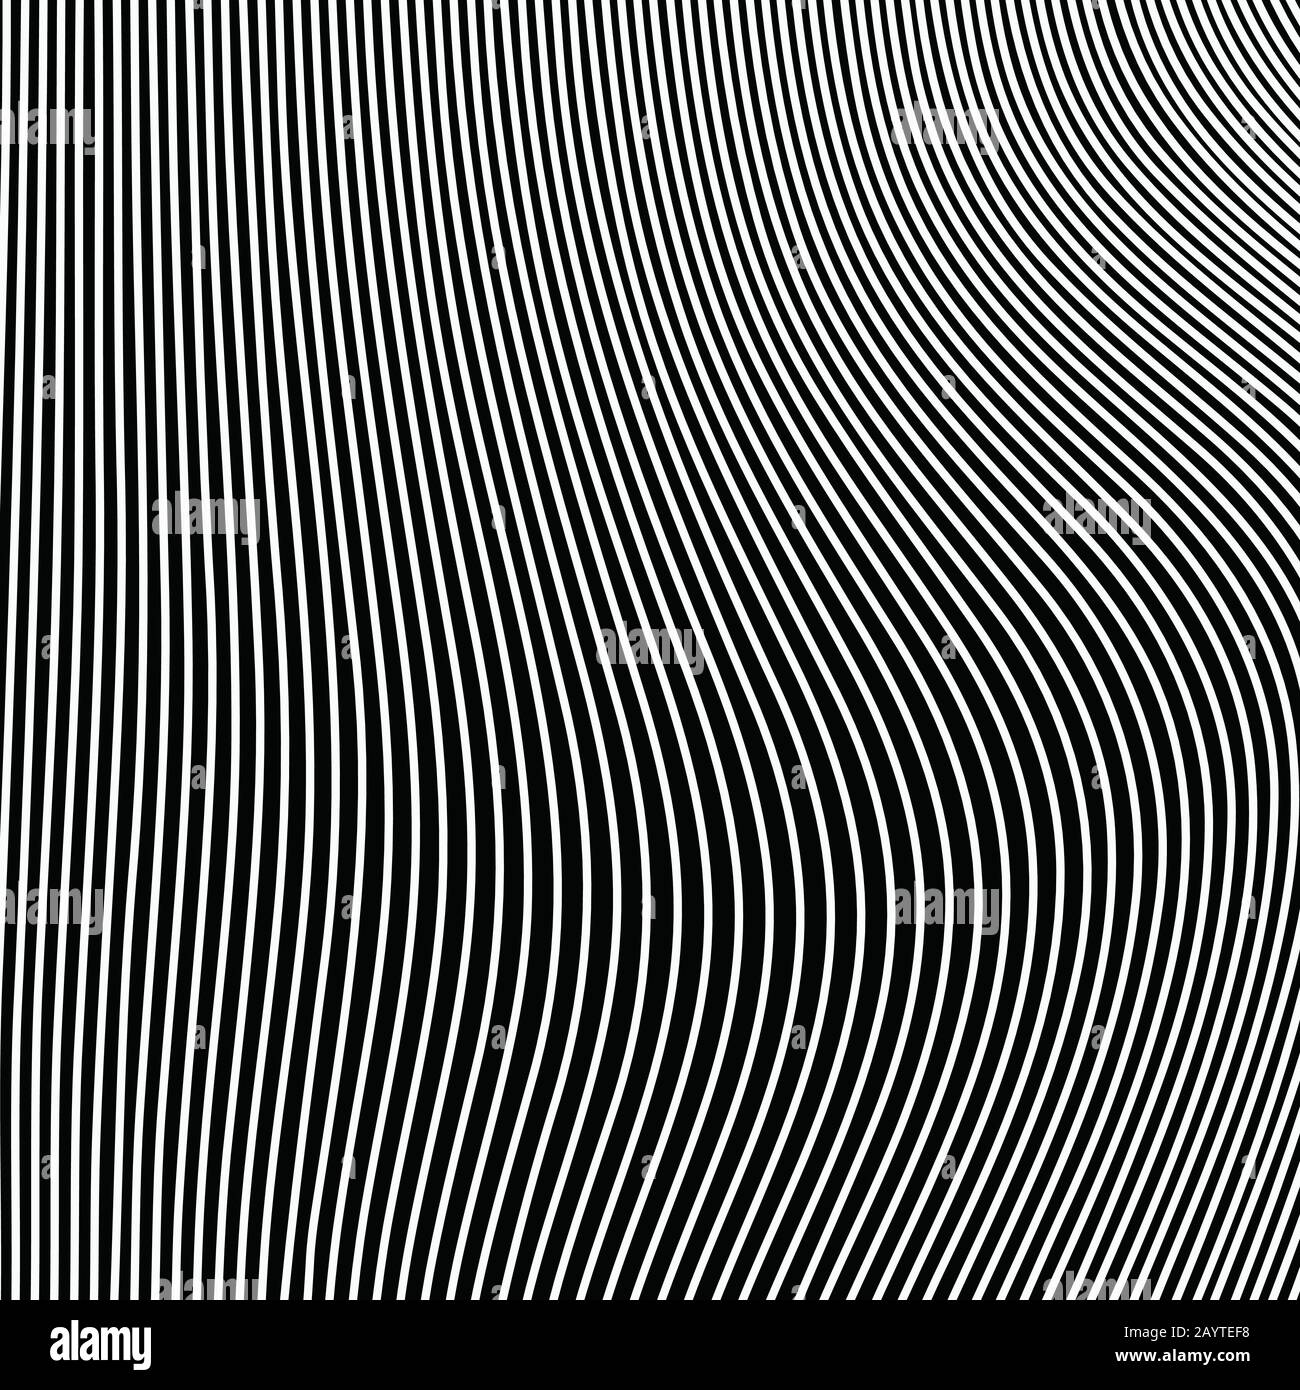 Victor Vasarely Print, Optical Illusion Art, Black and White Poster,  Bauhaus Poster, Circle Poster Art. 